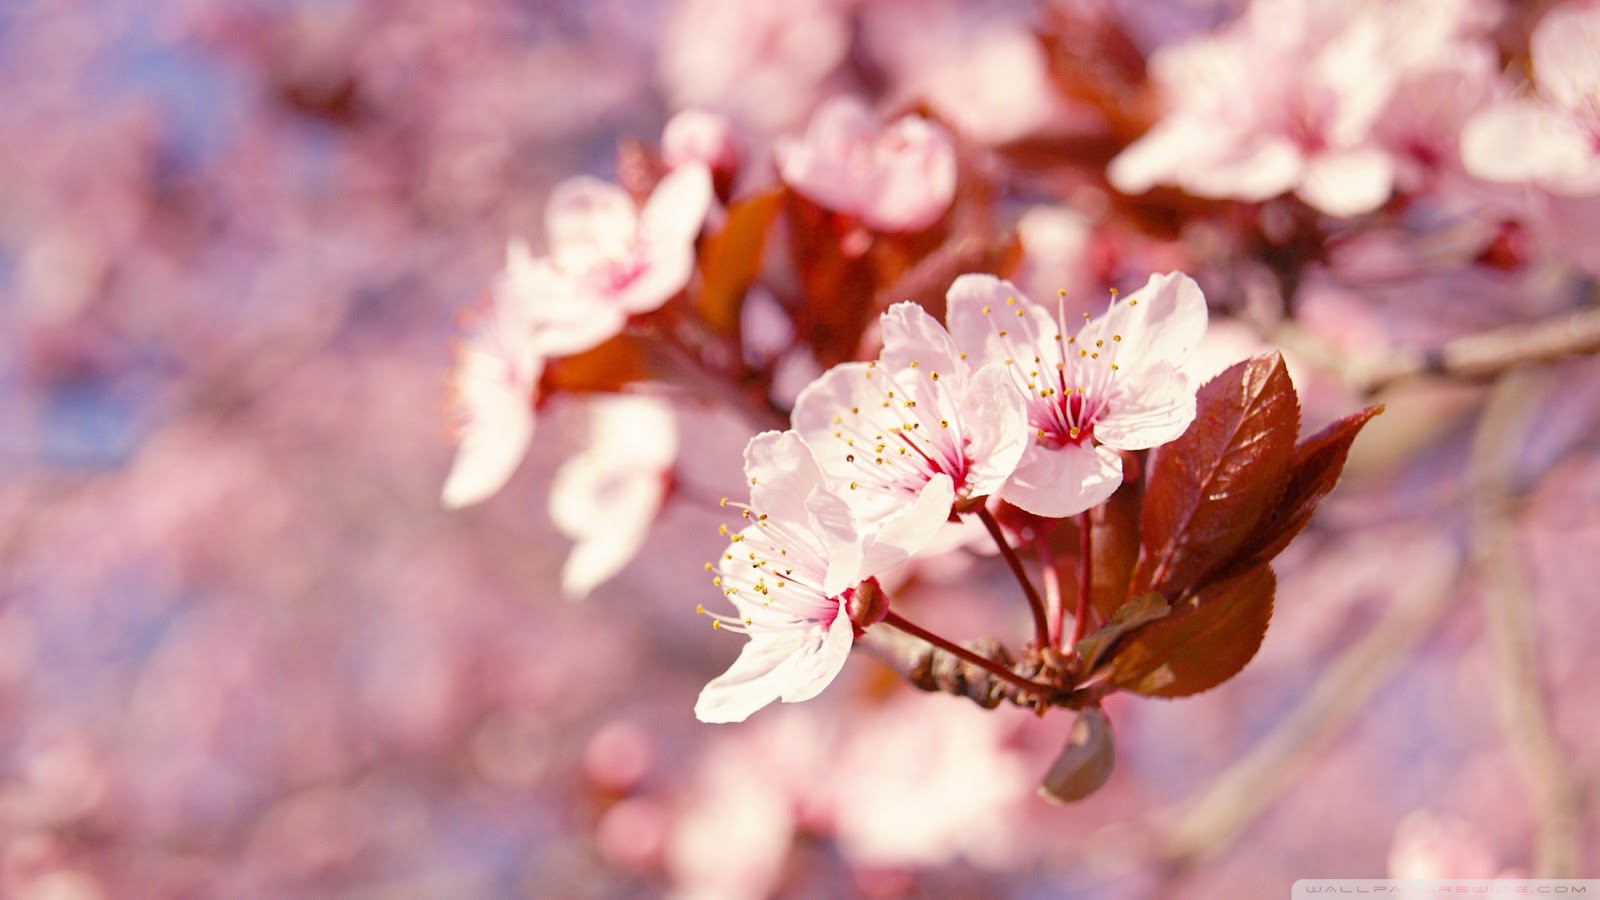 rosa sakura tapete,blume,blühen,frühling,blütenblatt,kirschblüte